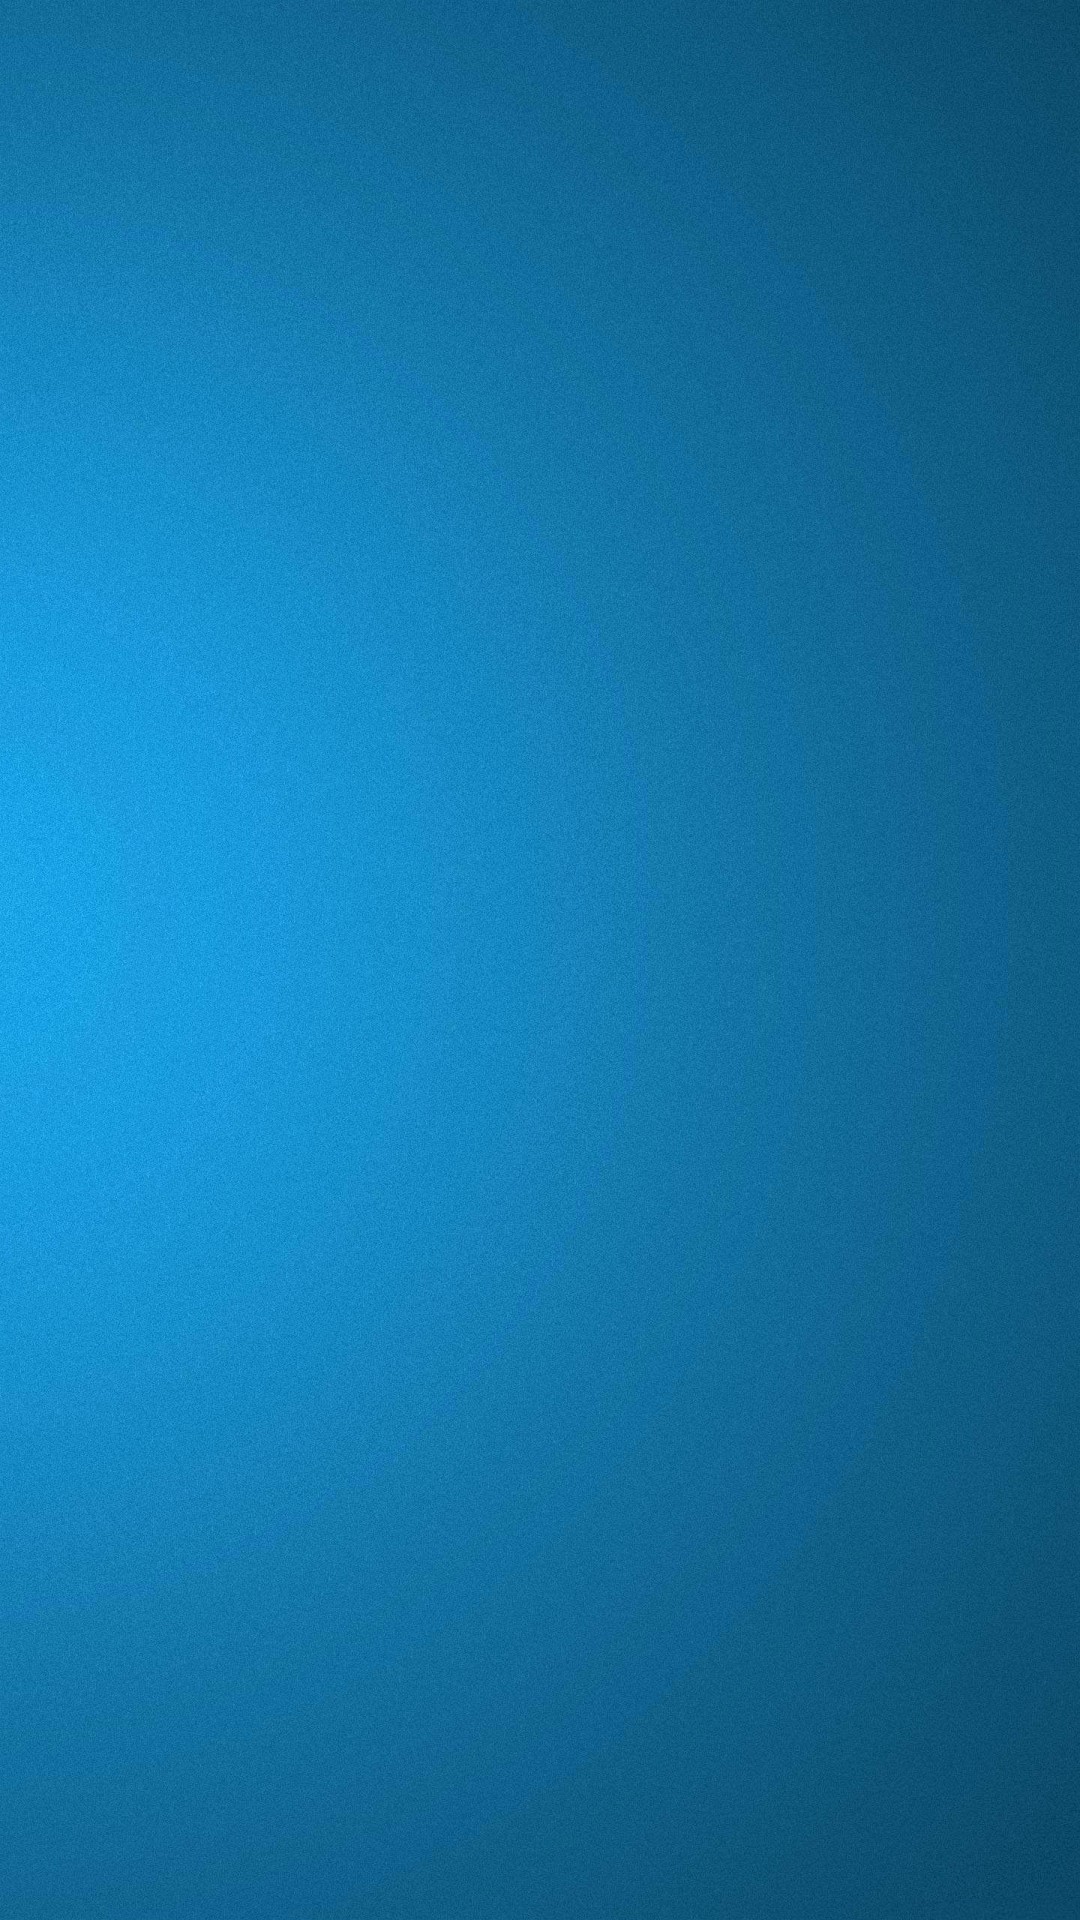 Blue iphone 6 wallpaper – Bing images